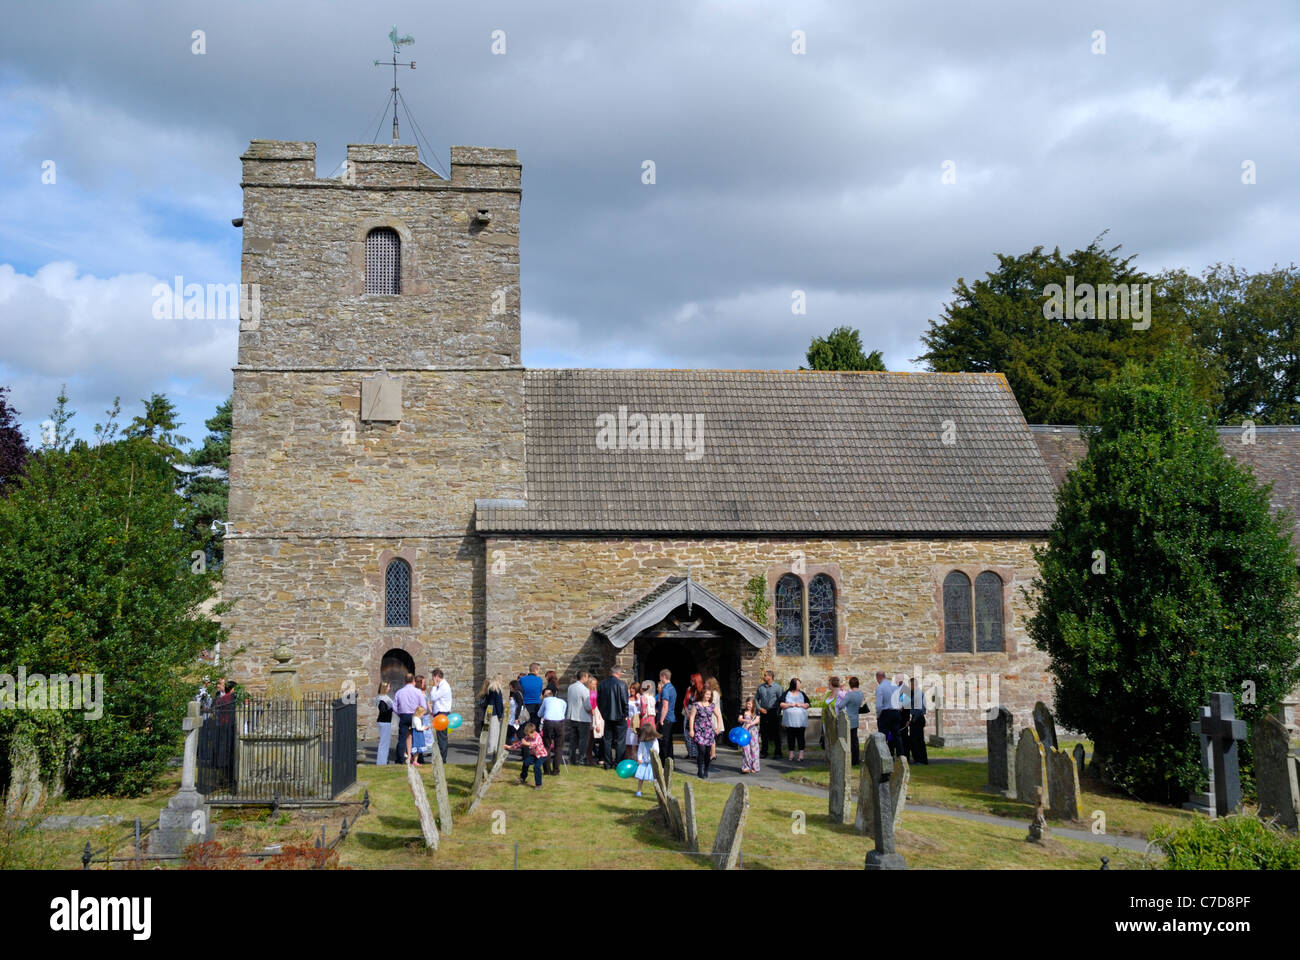 Parishioners gather outside St John the Baptist church at Stokesay Castle, Shropshire, England Stock Photo